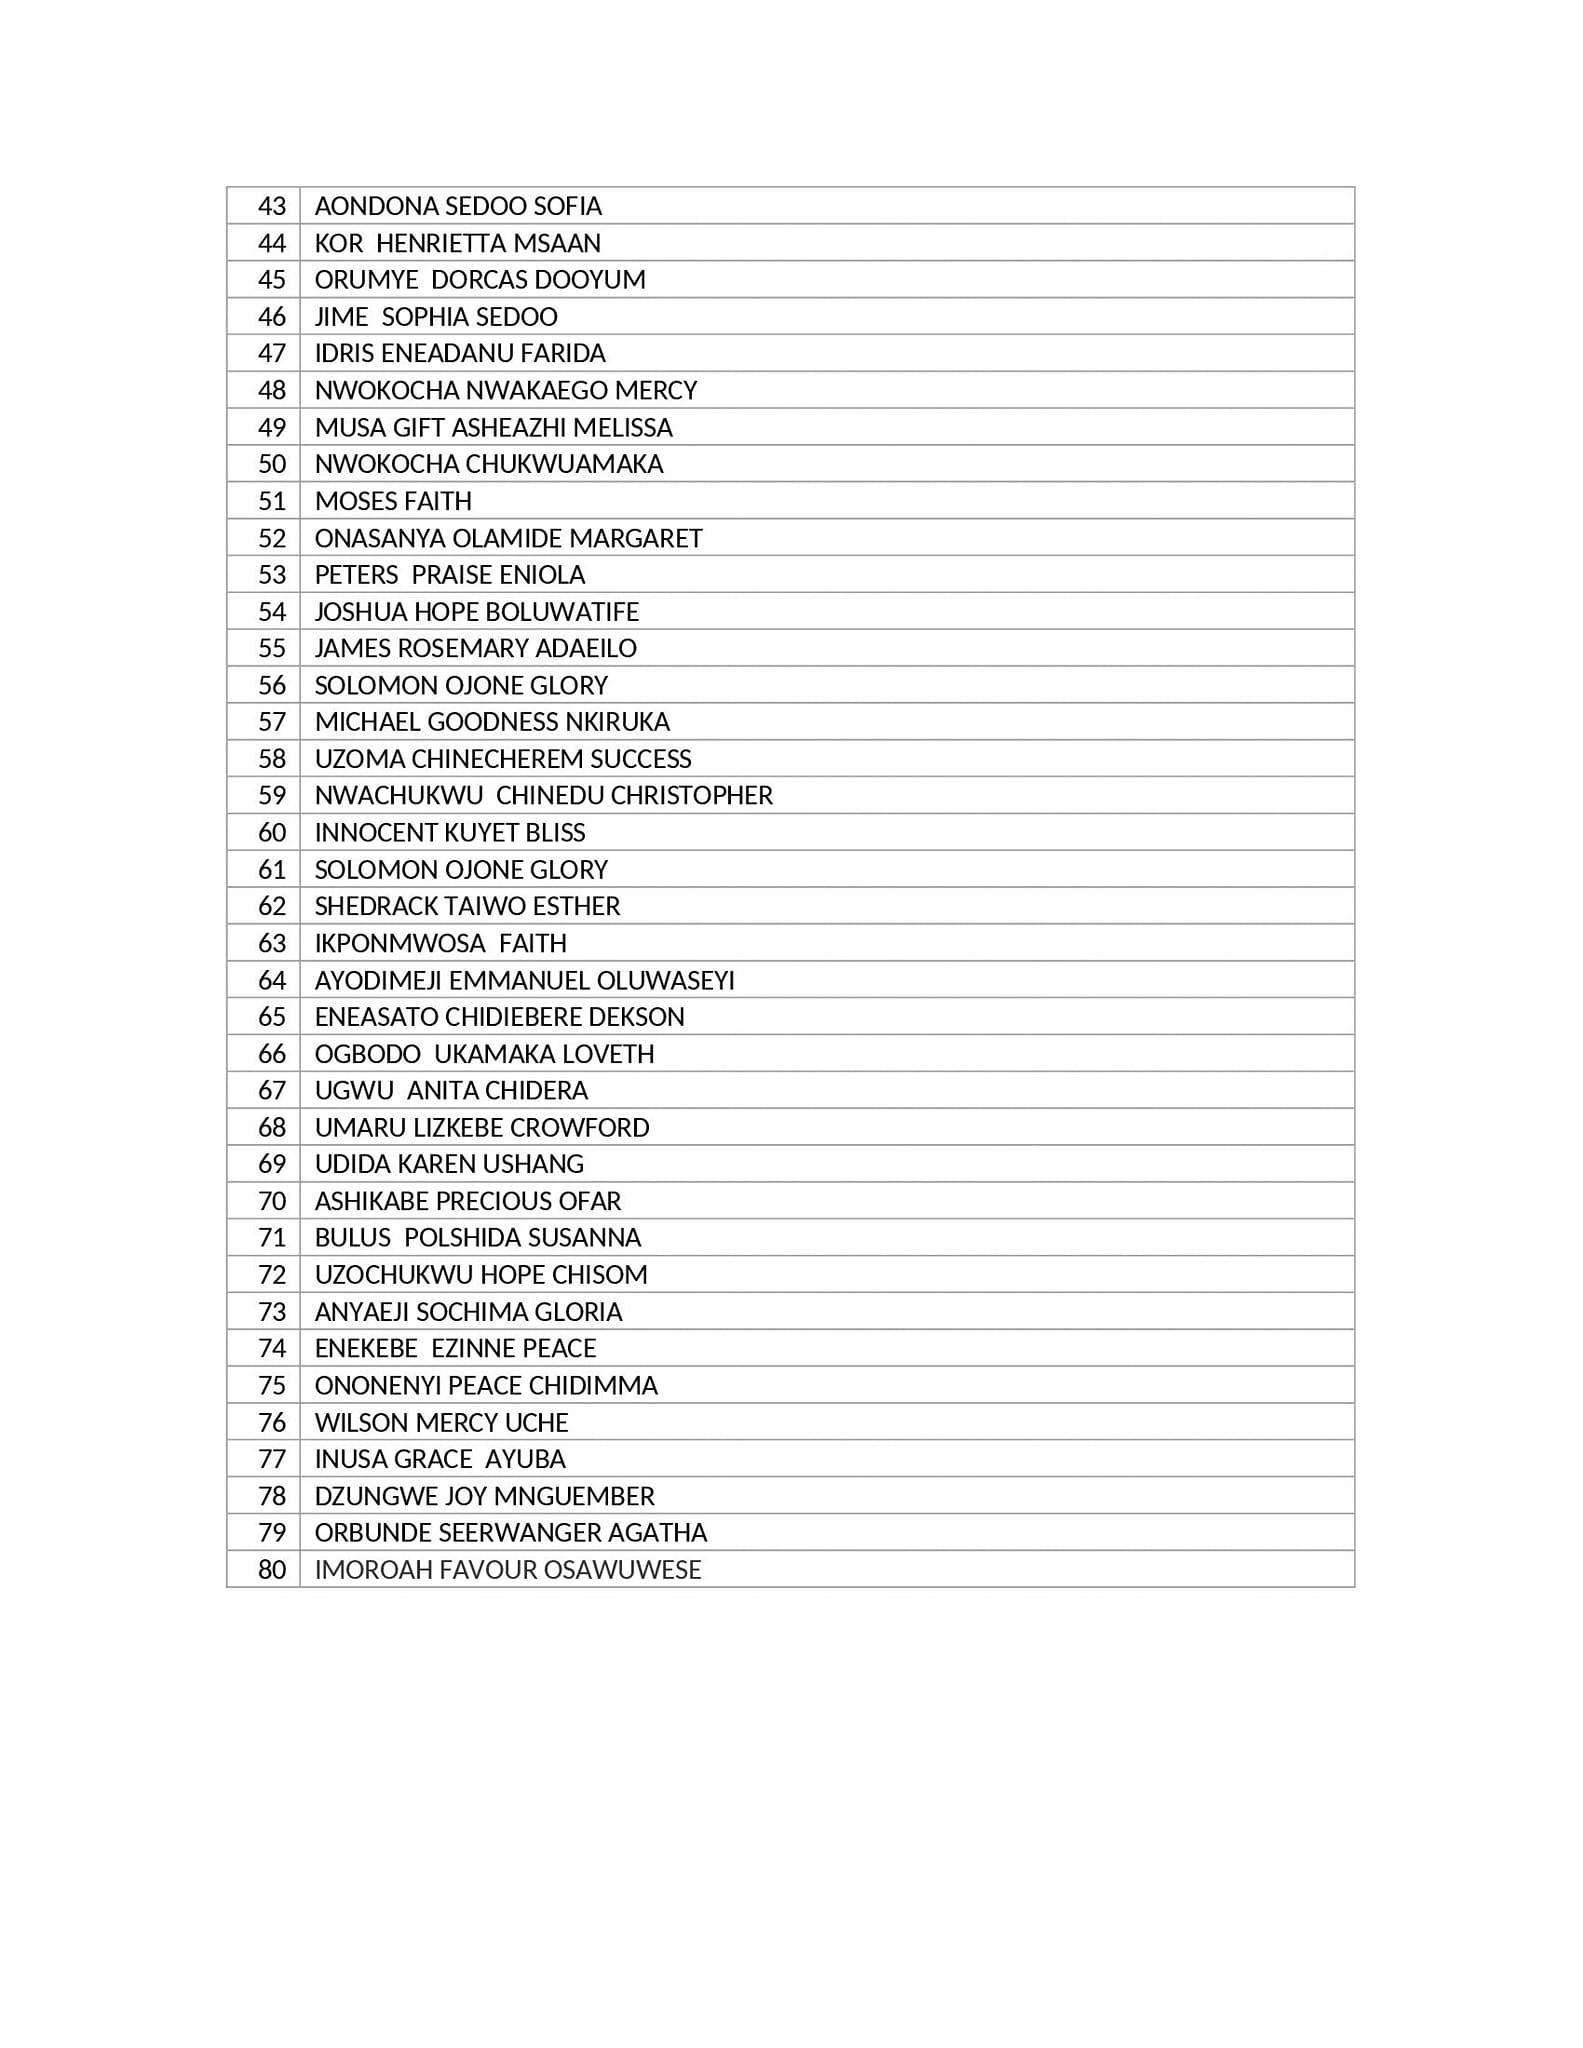 Makurdi College of Nursing Sciences Admission List 2022/2023